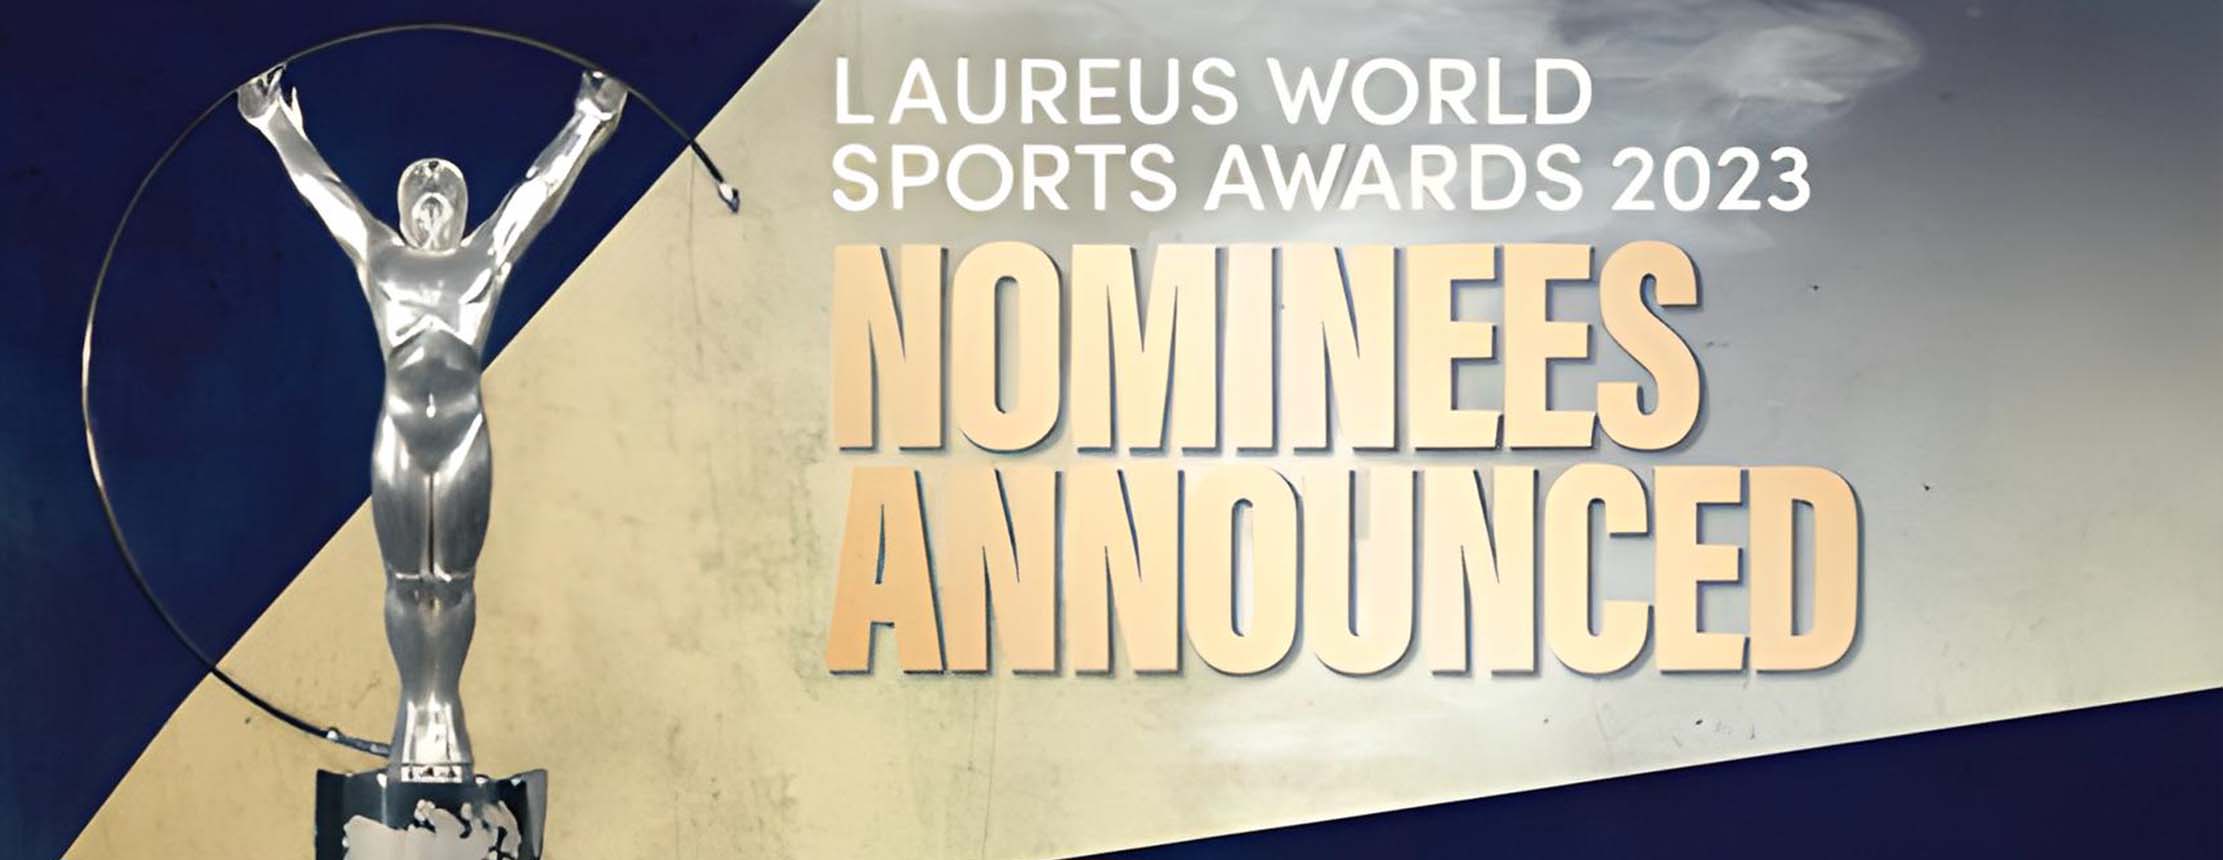 Laureus world sports awards 2023 nominees poster